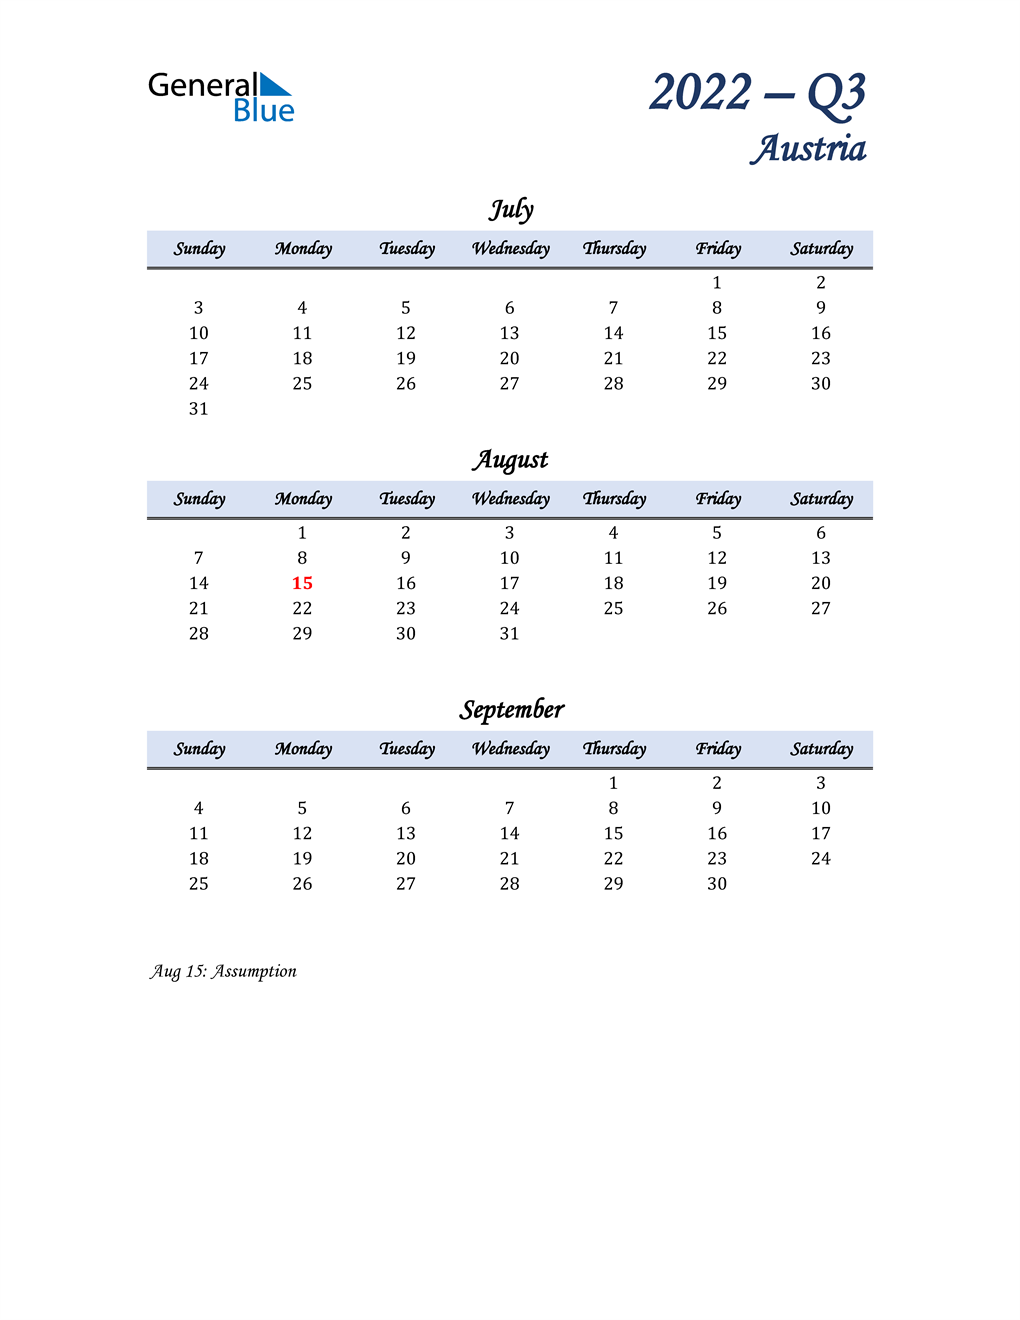  July, August, and September Calendar for Austria